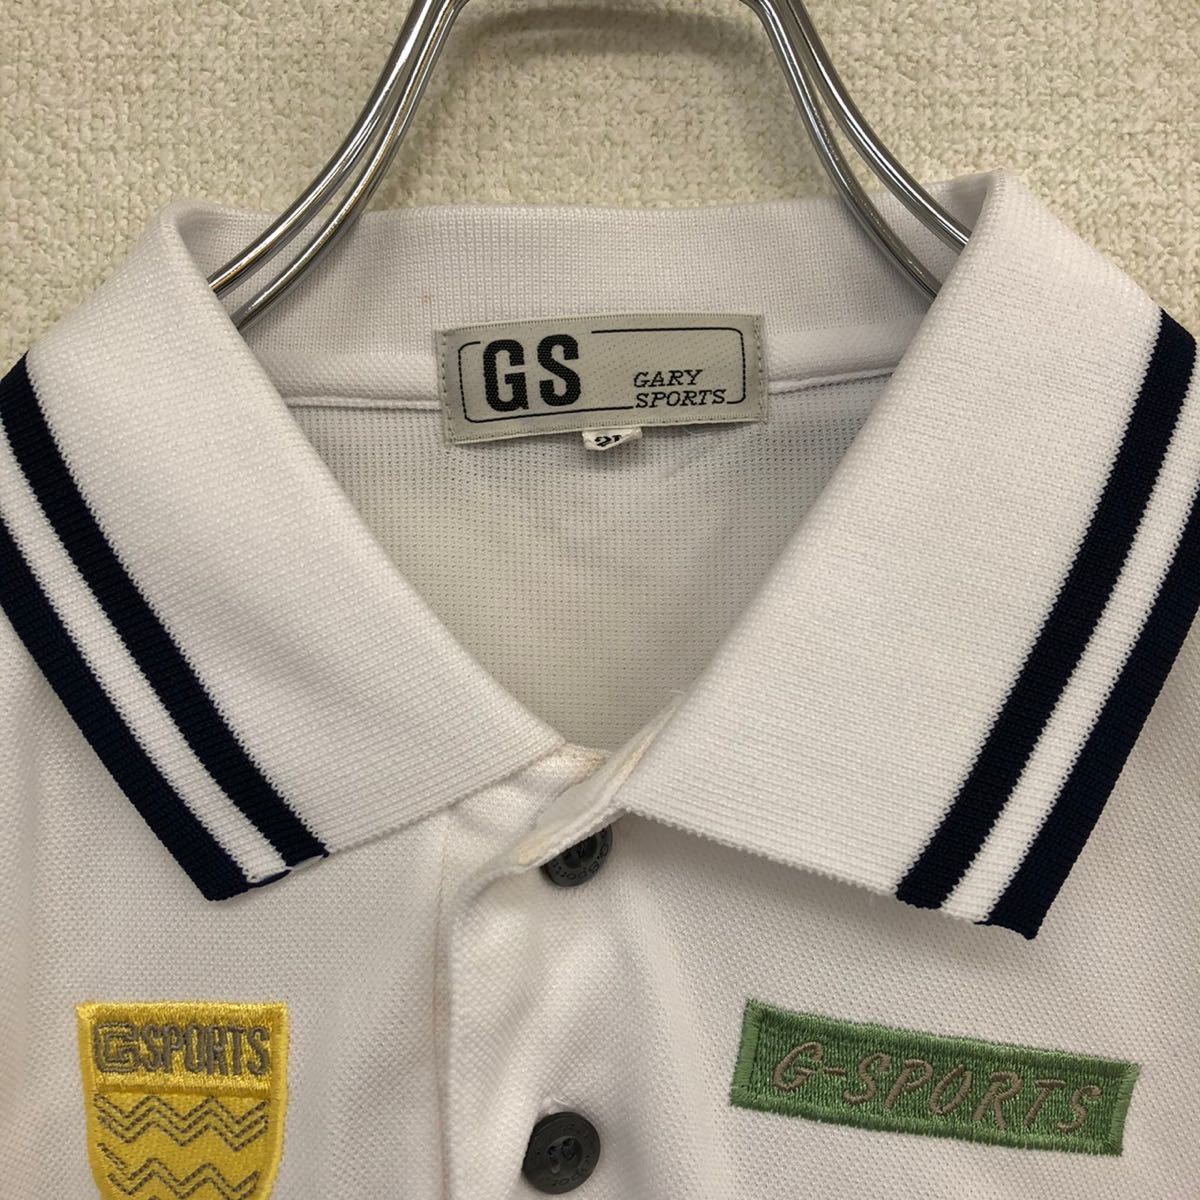 GS GARY SPORTS 半袖ゴルフシャツ ポロシャツ メンズ 2Lサイズ ホワイト 日本製 春夏モデル ビッグサイズの画像6